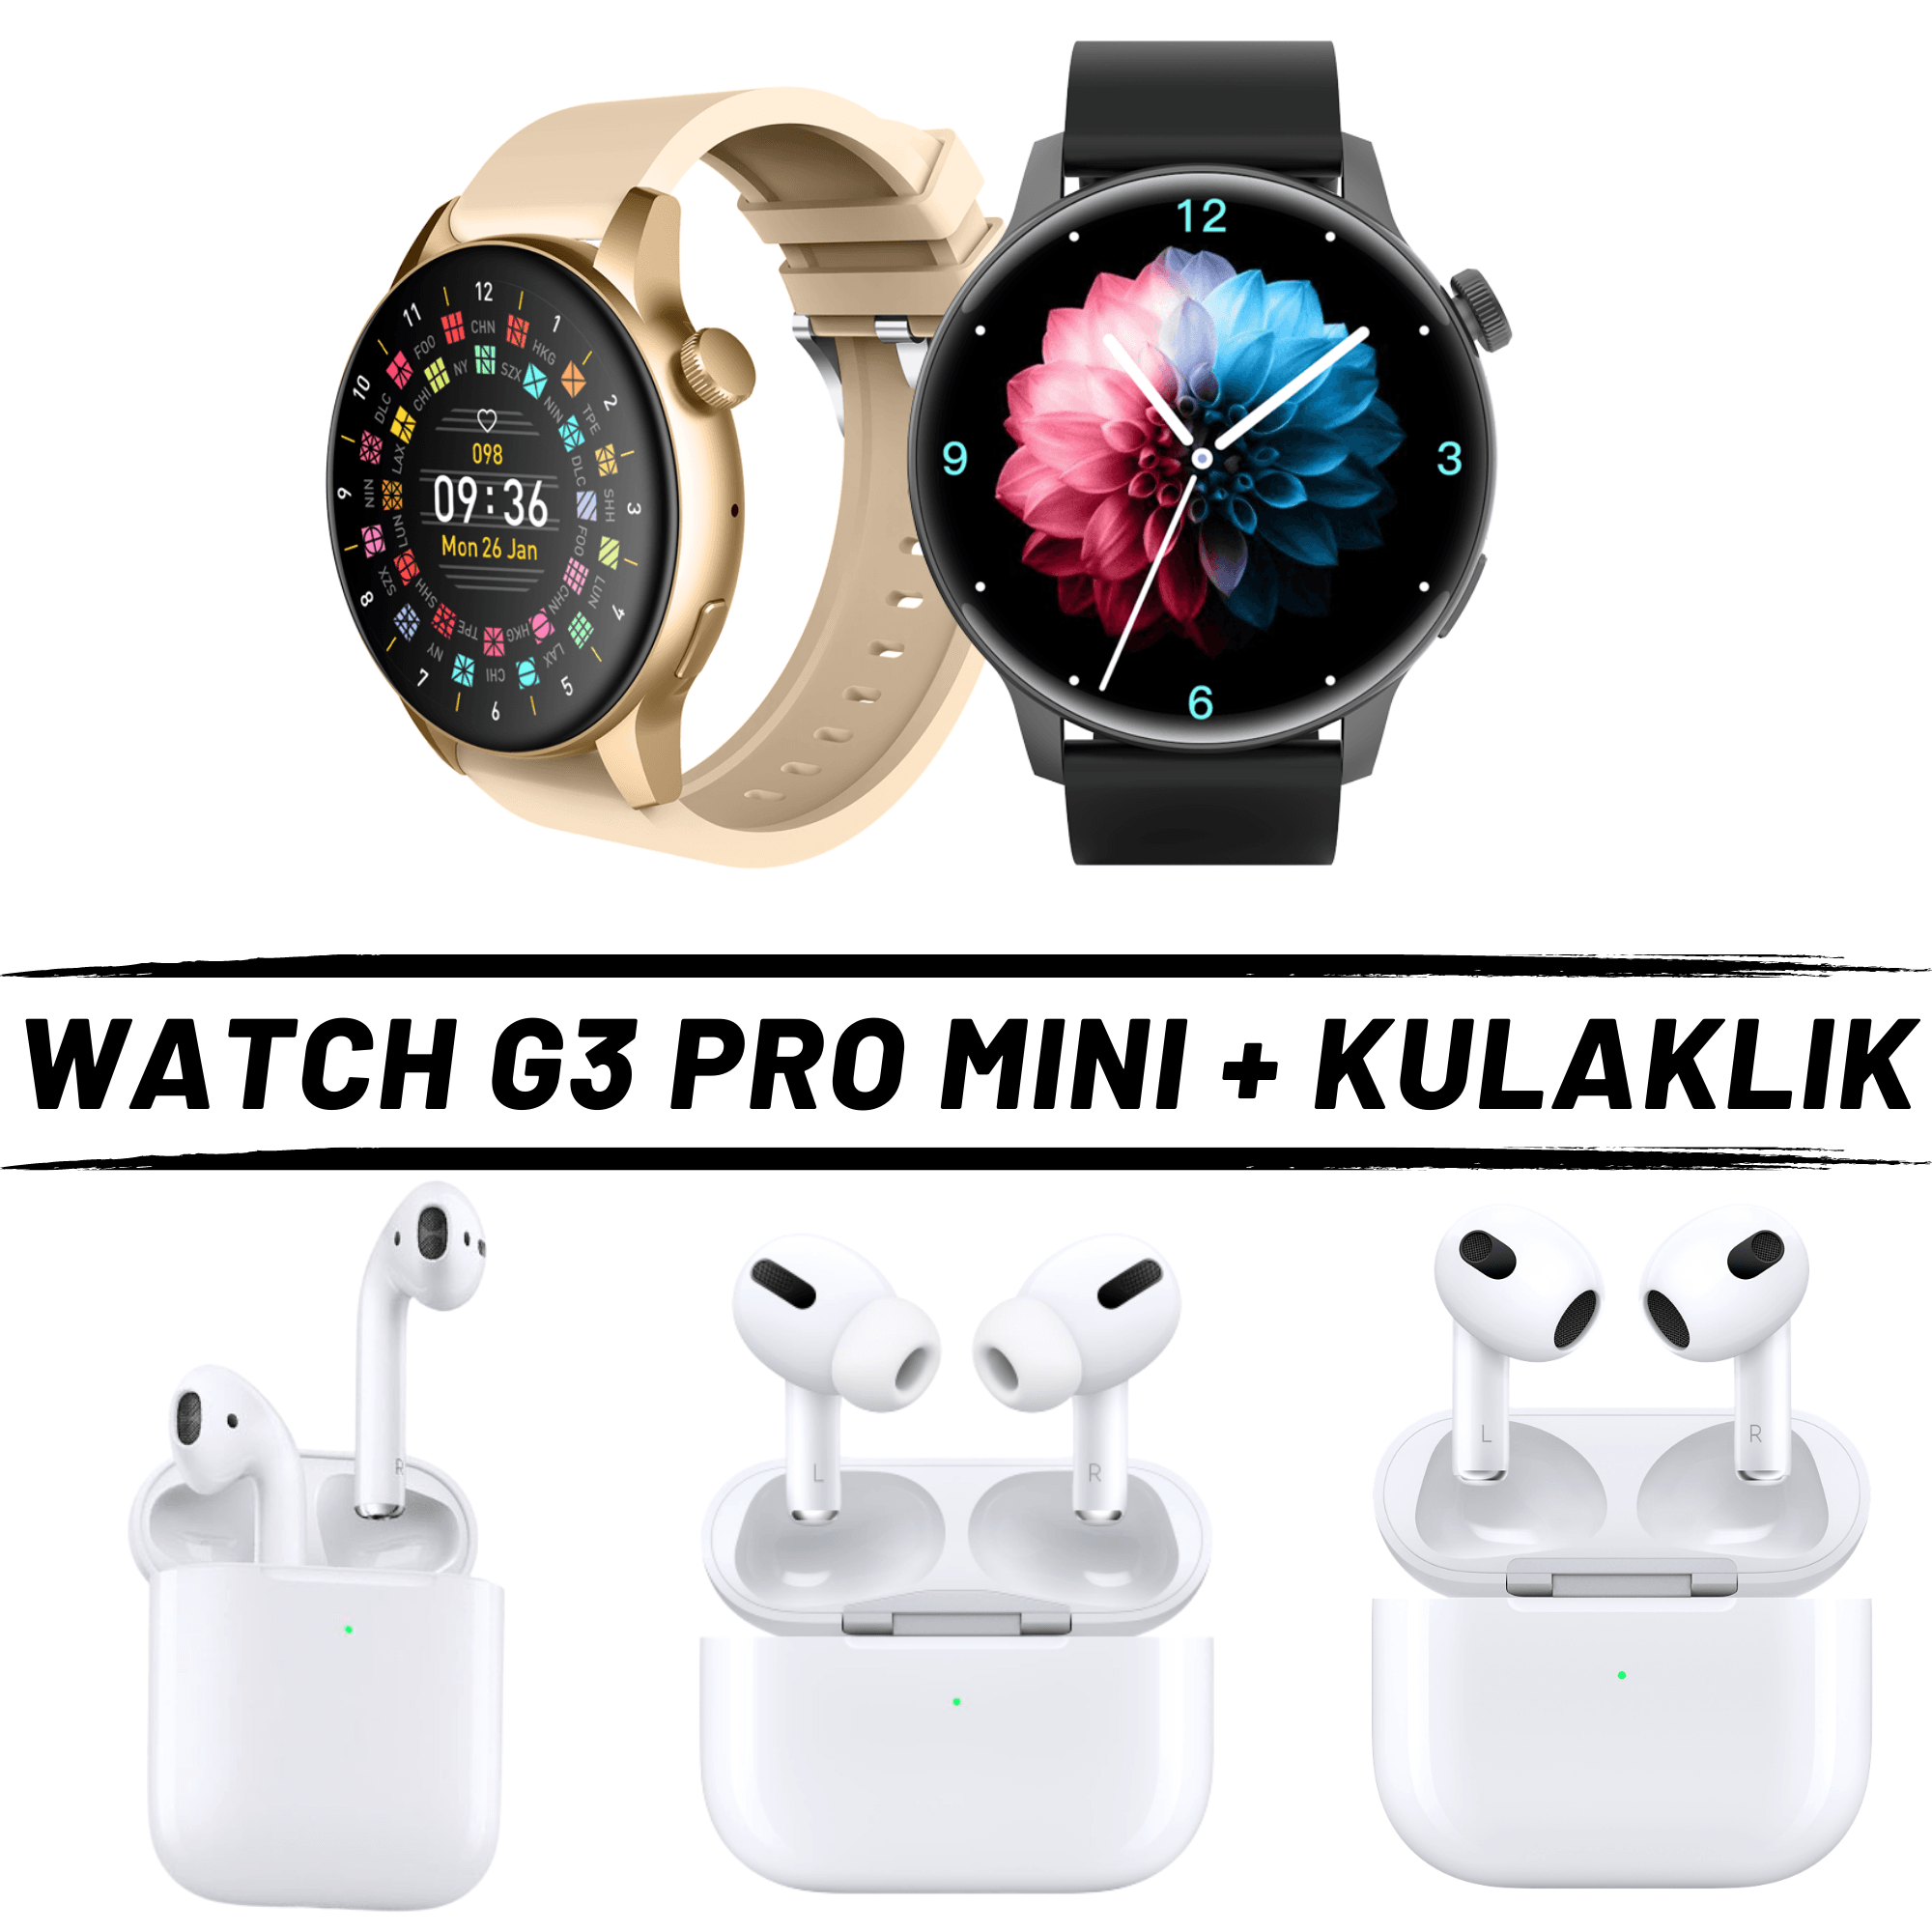 Watch G3 Pro Mini + Kulaklık